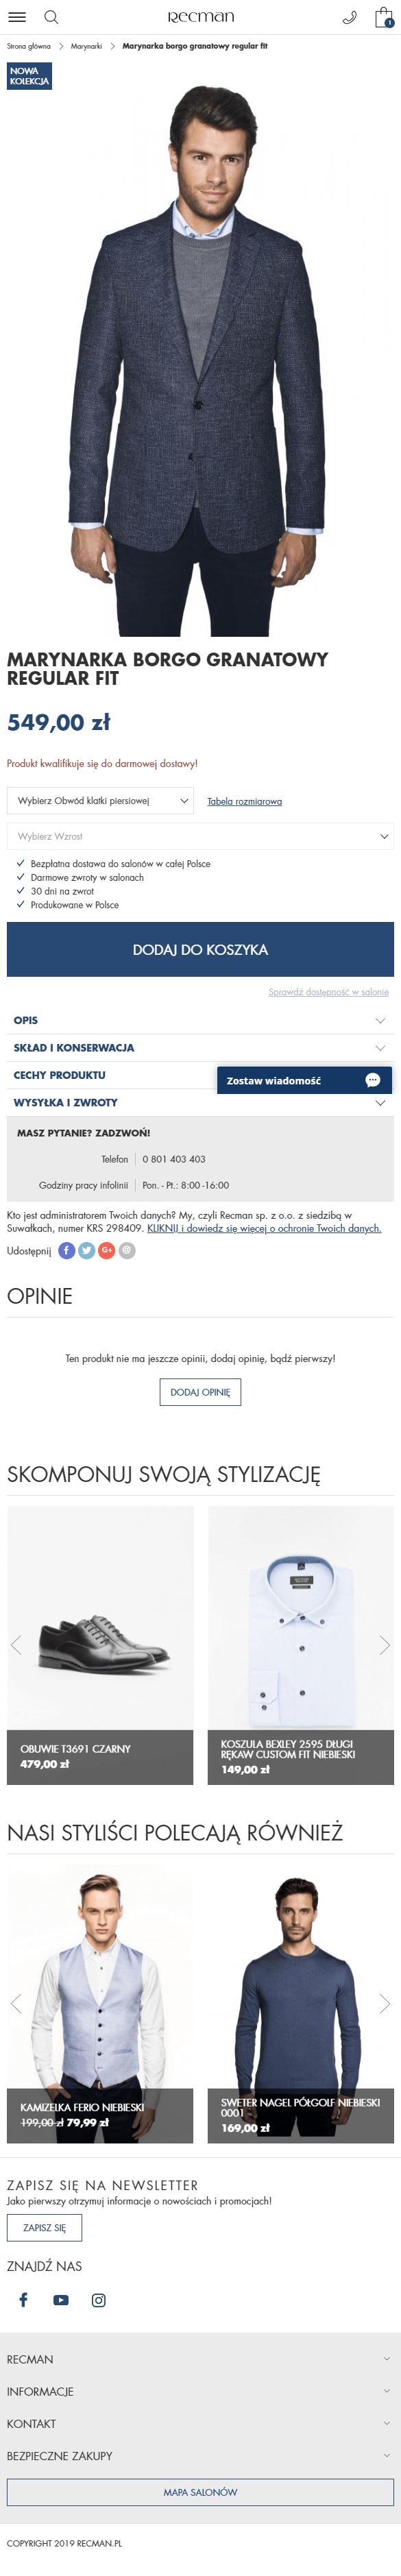 screencapture-recman-pl-marynarka-borgo-granatowy-regular-fit-html-2019-10-30-16_50_16